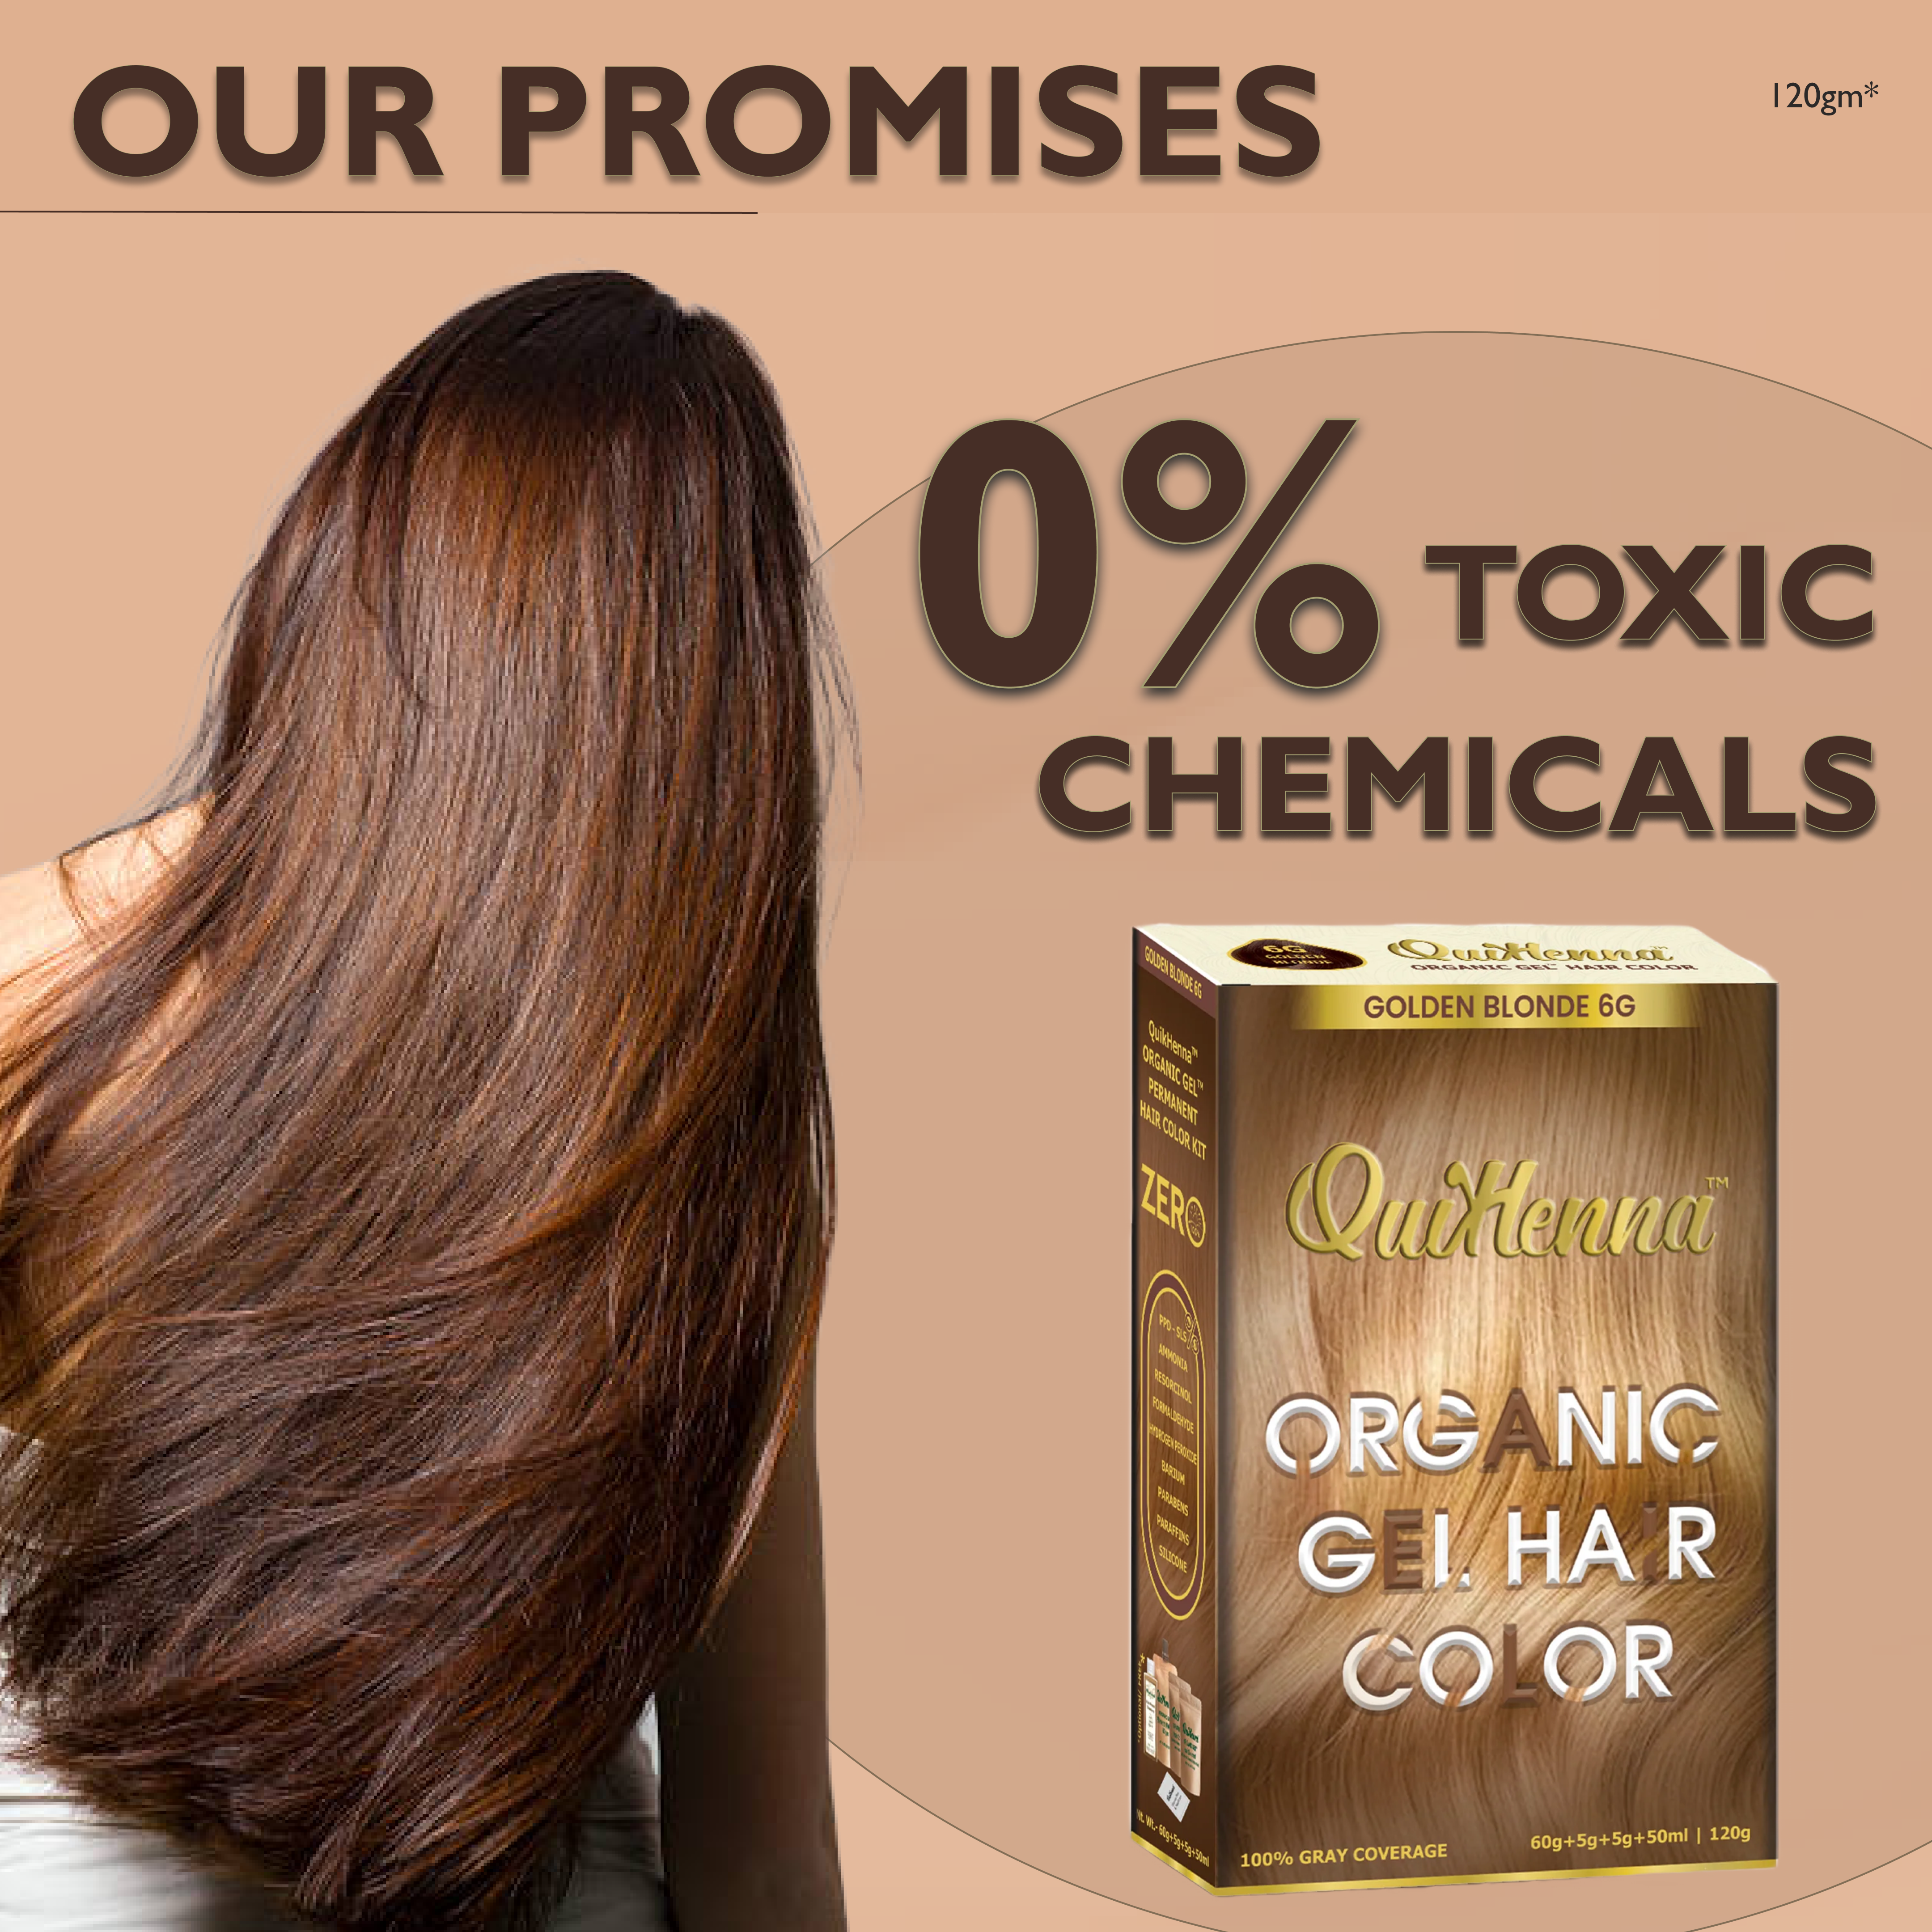 QuikHenna PPD & Ammonia Free Organic Gel Hair Colour 6G Golden Blonde for Men & Women 120GM